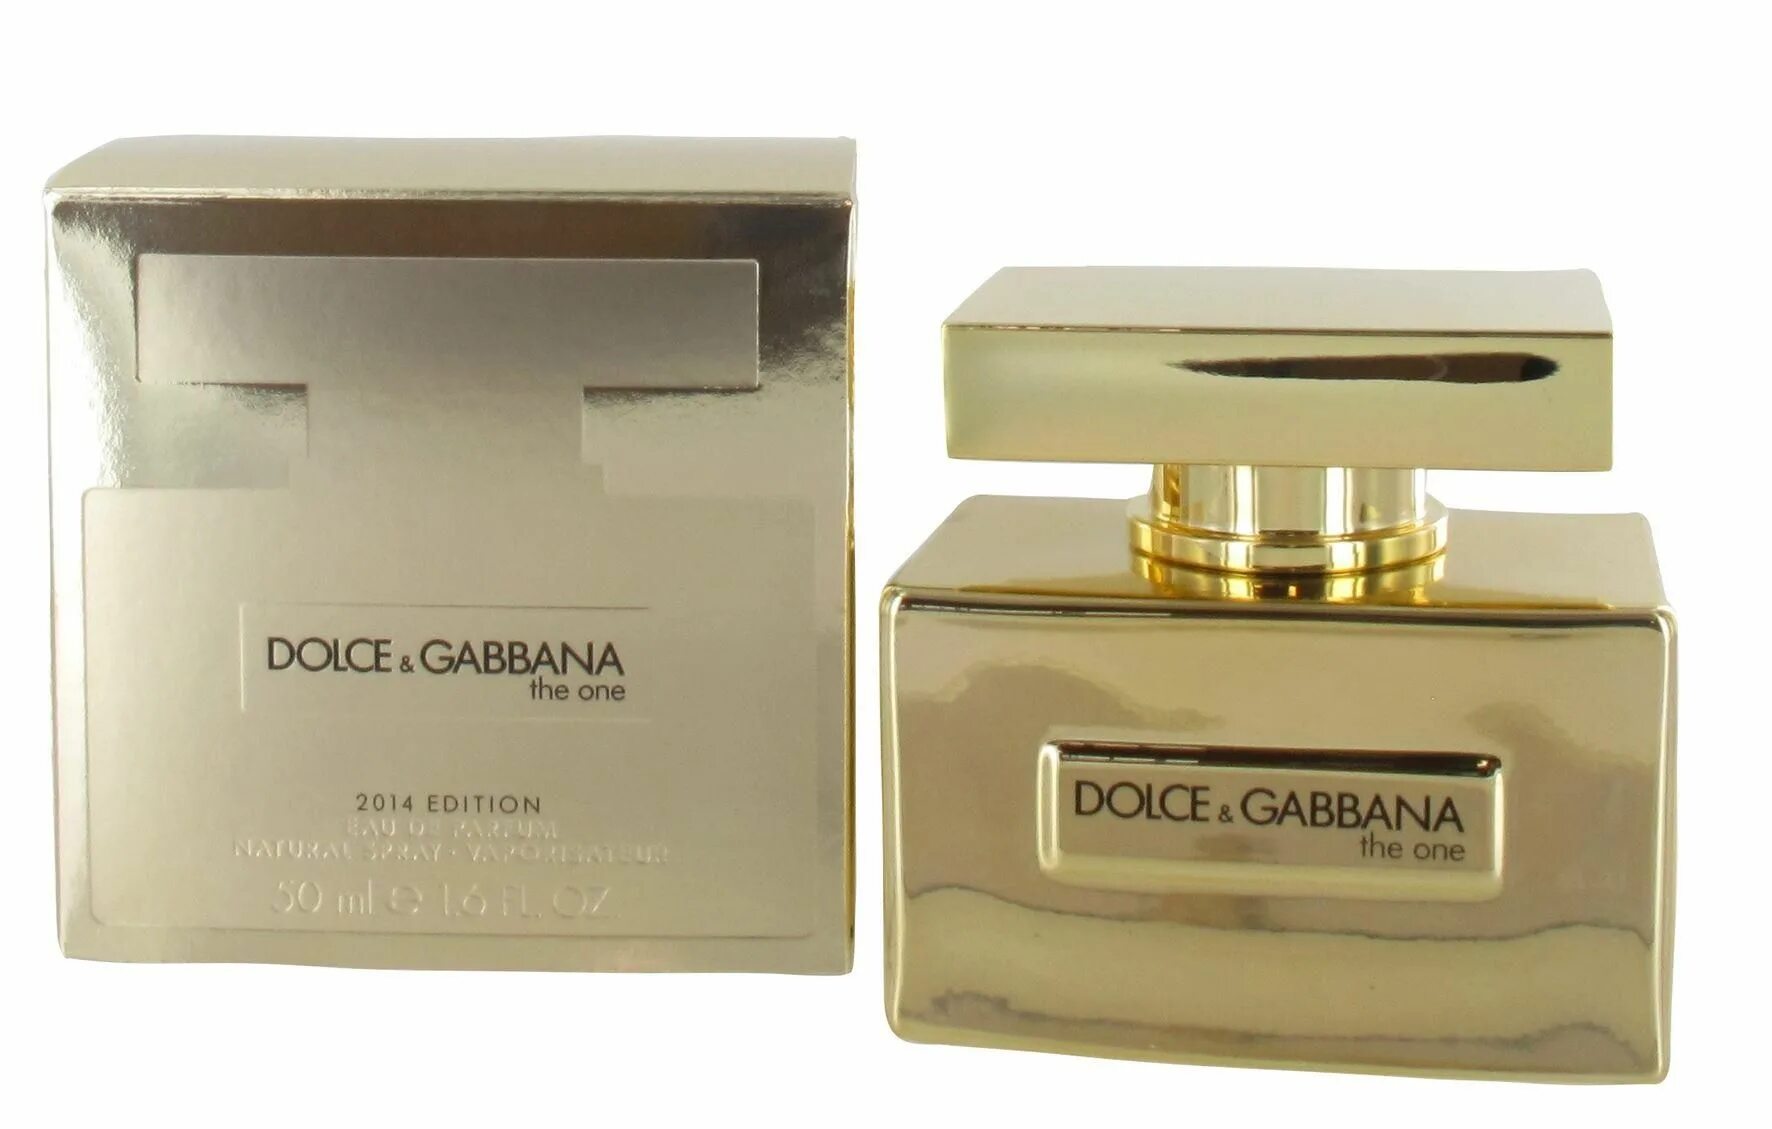 Dolce Gabbana the one Gold intense 30 ml. Дольче Габбана the one Gold женские. D&G the one Gold EDP 50ml. Dolce&Gabbana the one Gold intense EDP.